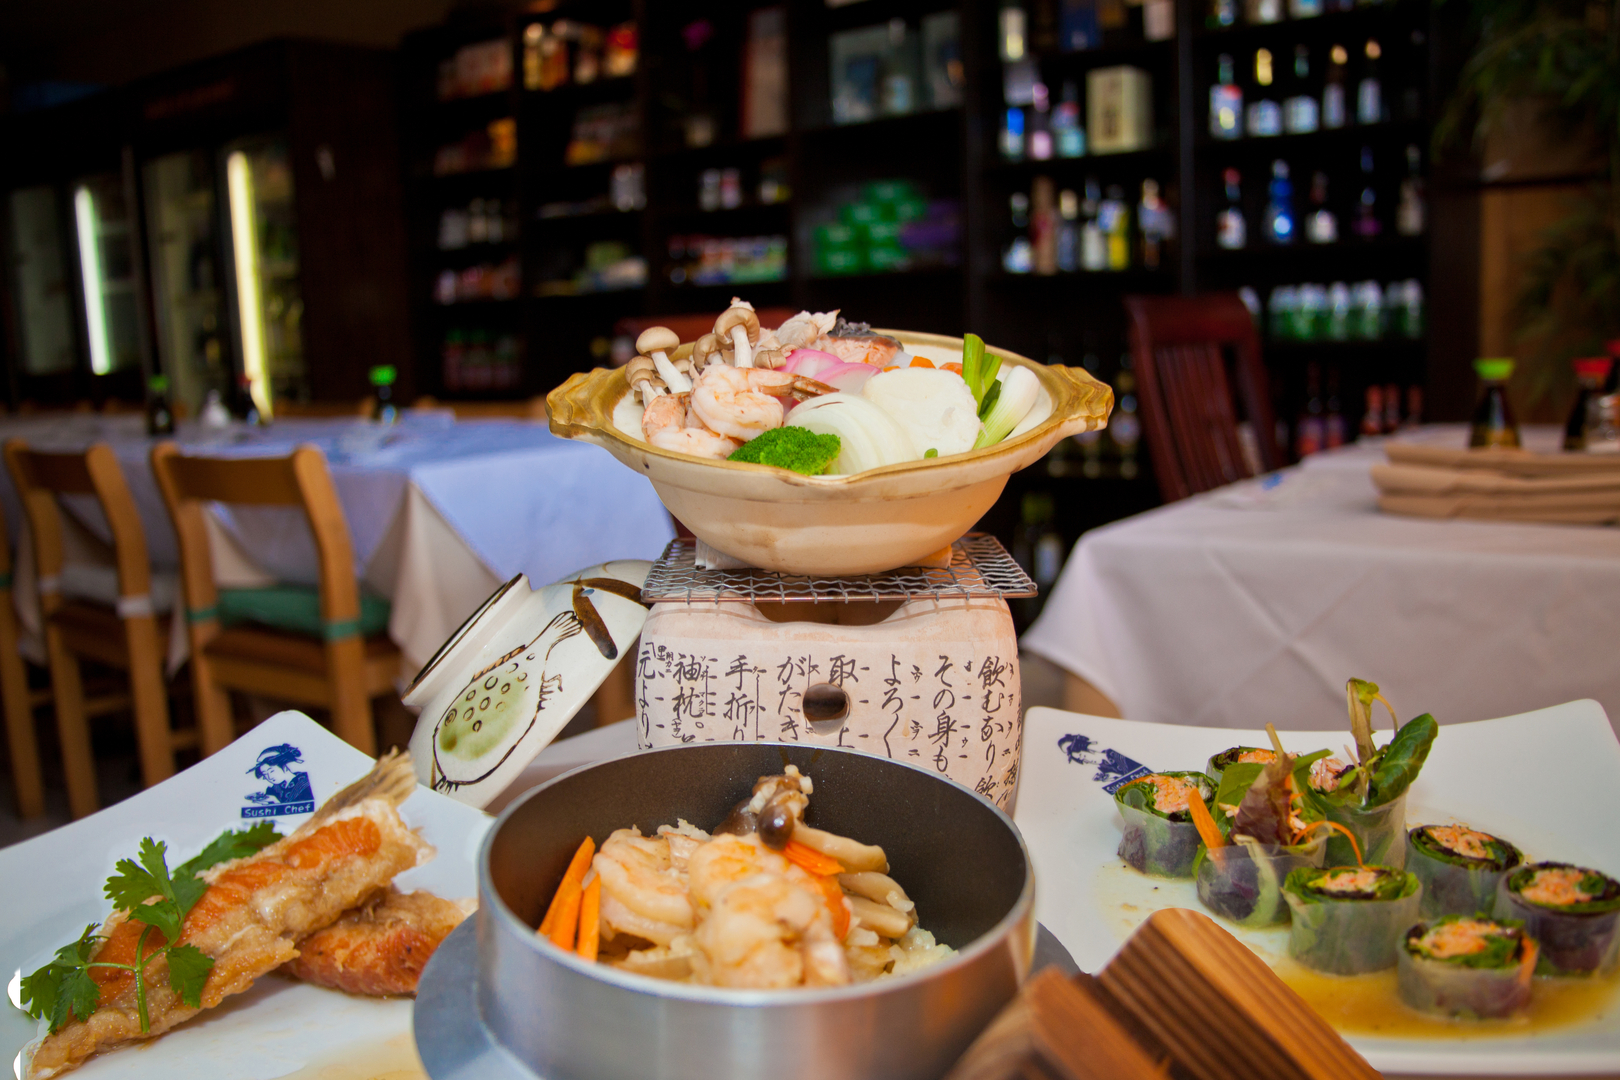 SUSHI CHEF JAPANESE RESTAURANT & MARKET, Coral Gables - Menu, Prices &  Restaurant Reviews - Tripadvisor